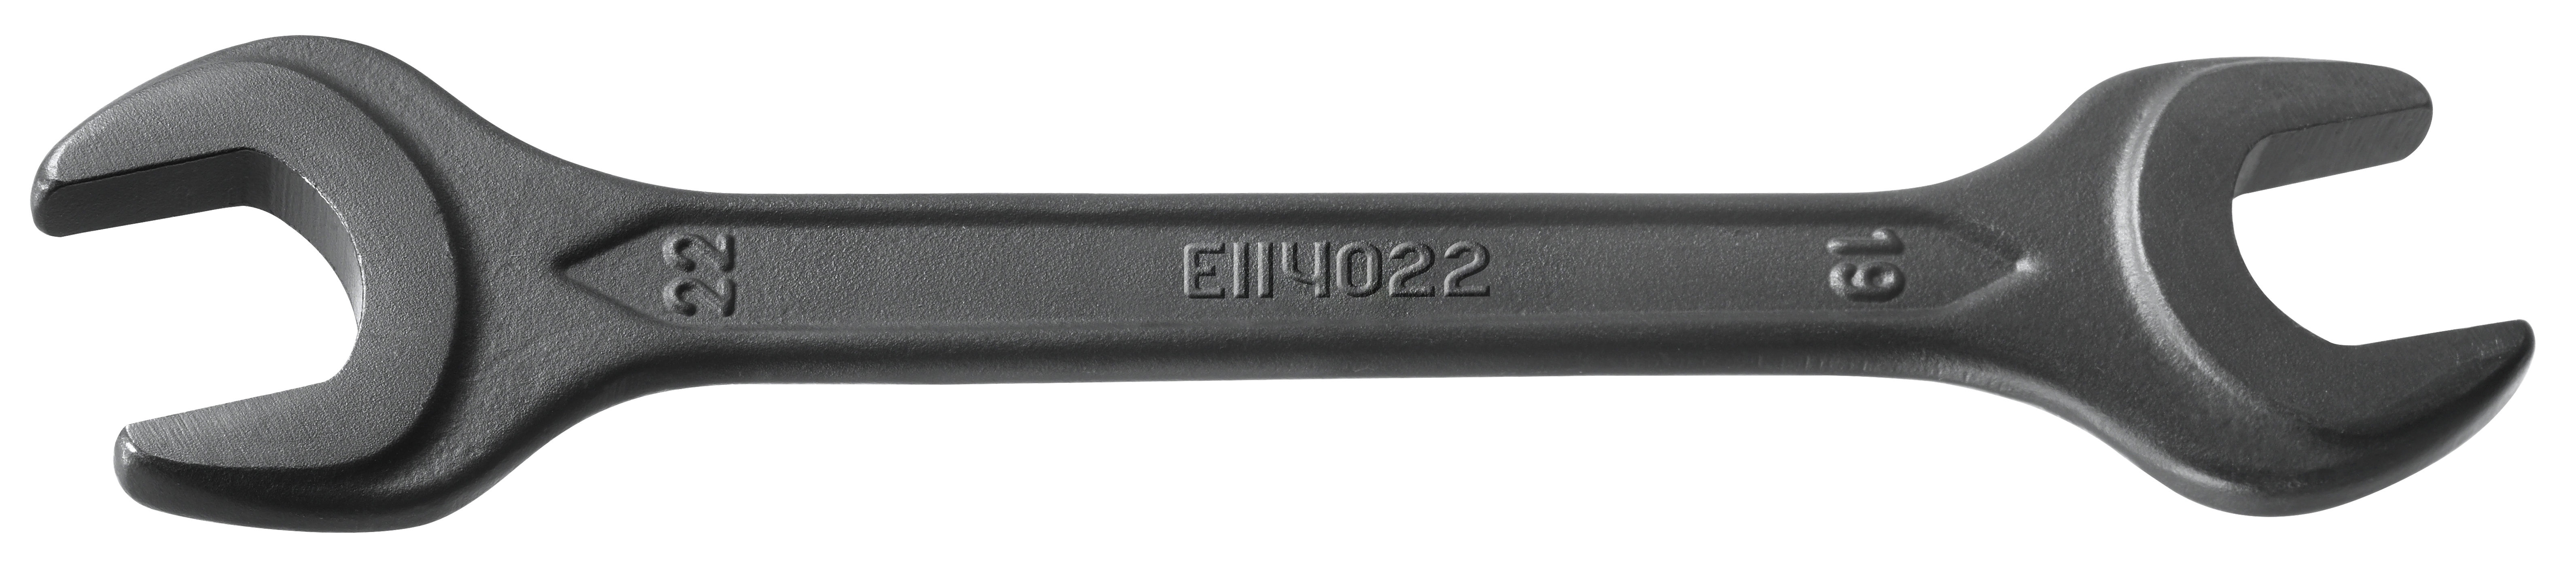 1.E114022 Impact steeksleutel din 19x22 mm